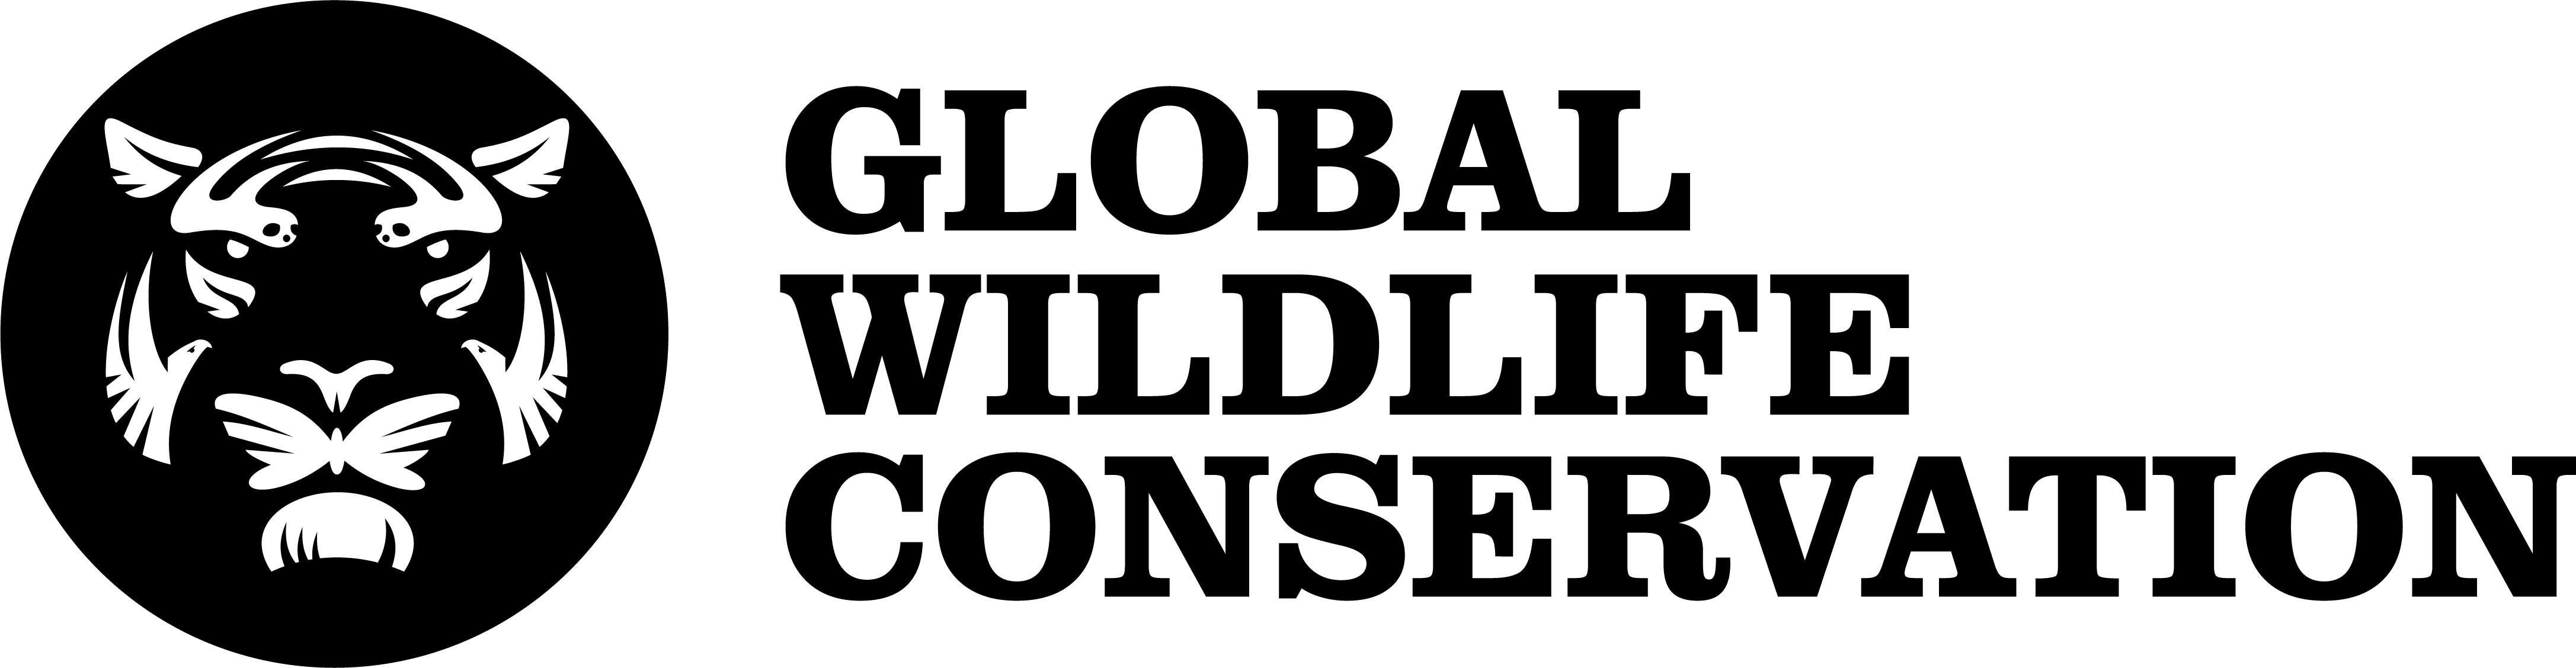 Global Wildlife Conservation logo